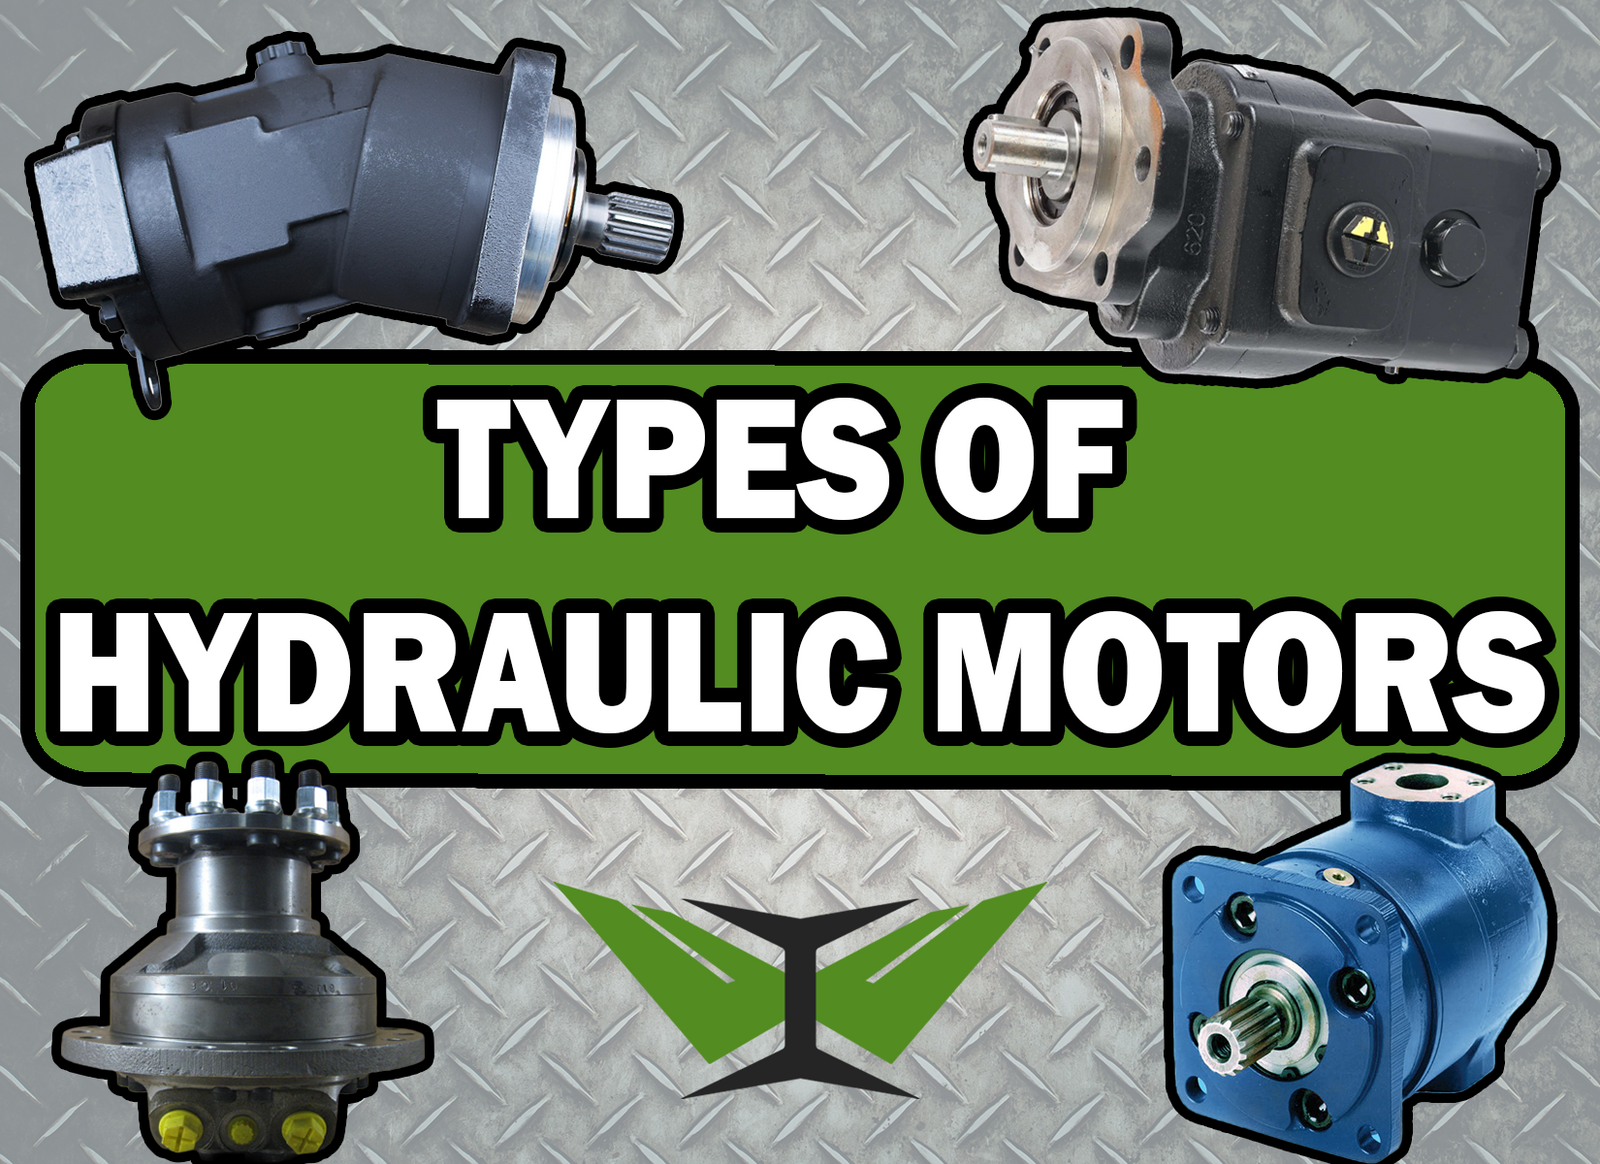 Types of Hydraulic Motors